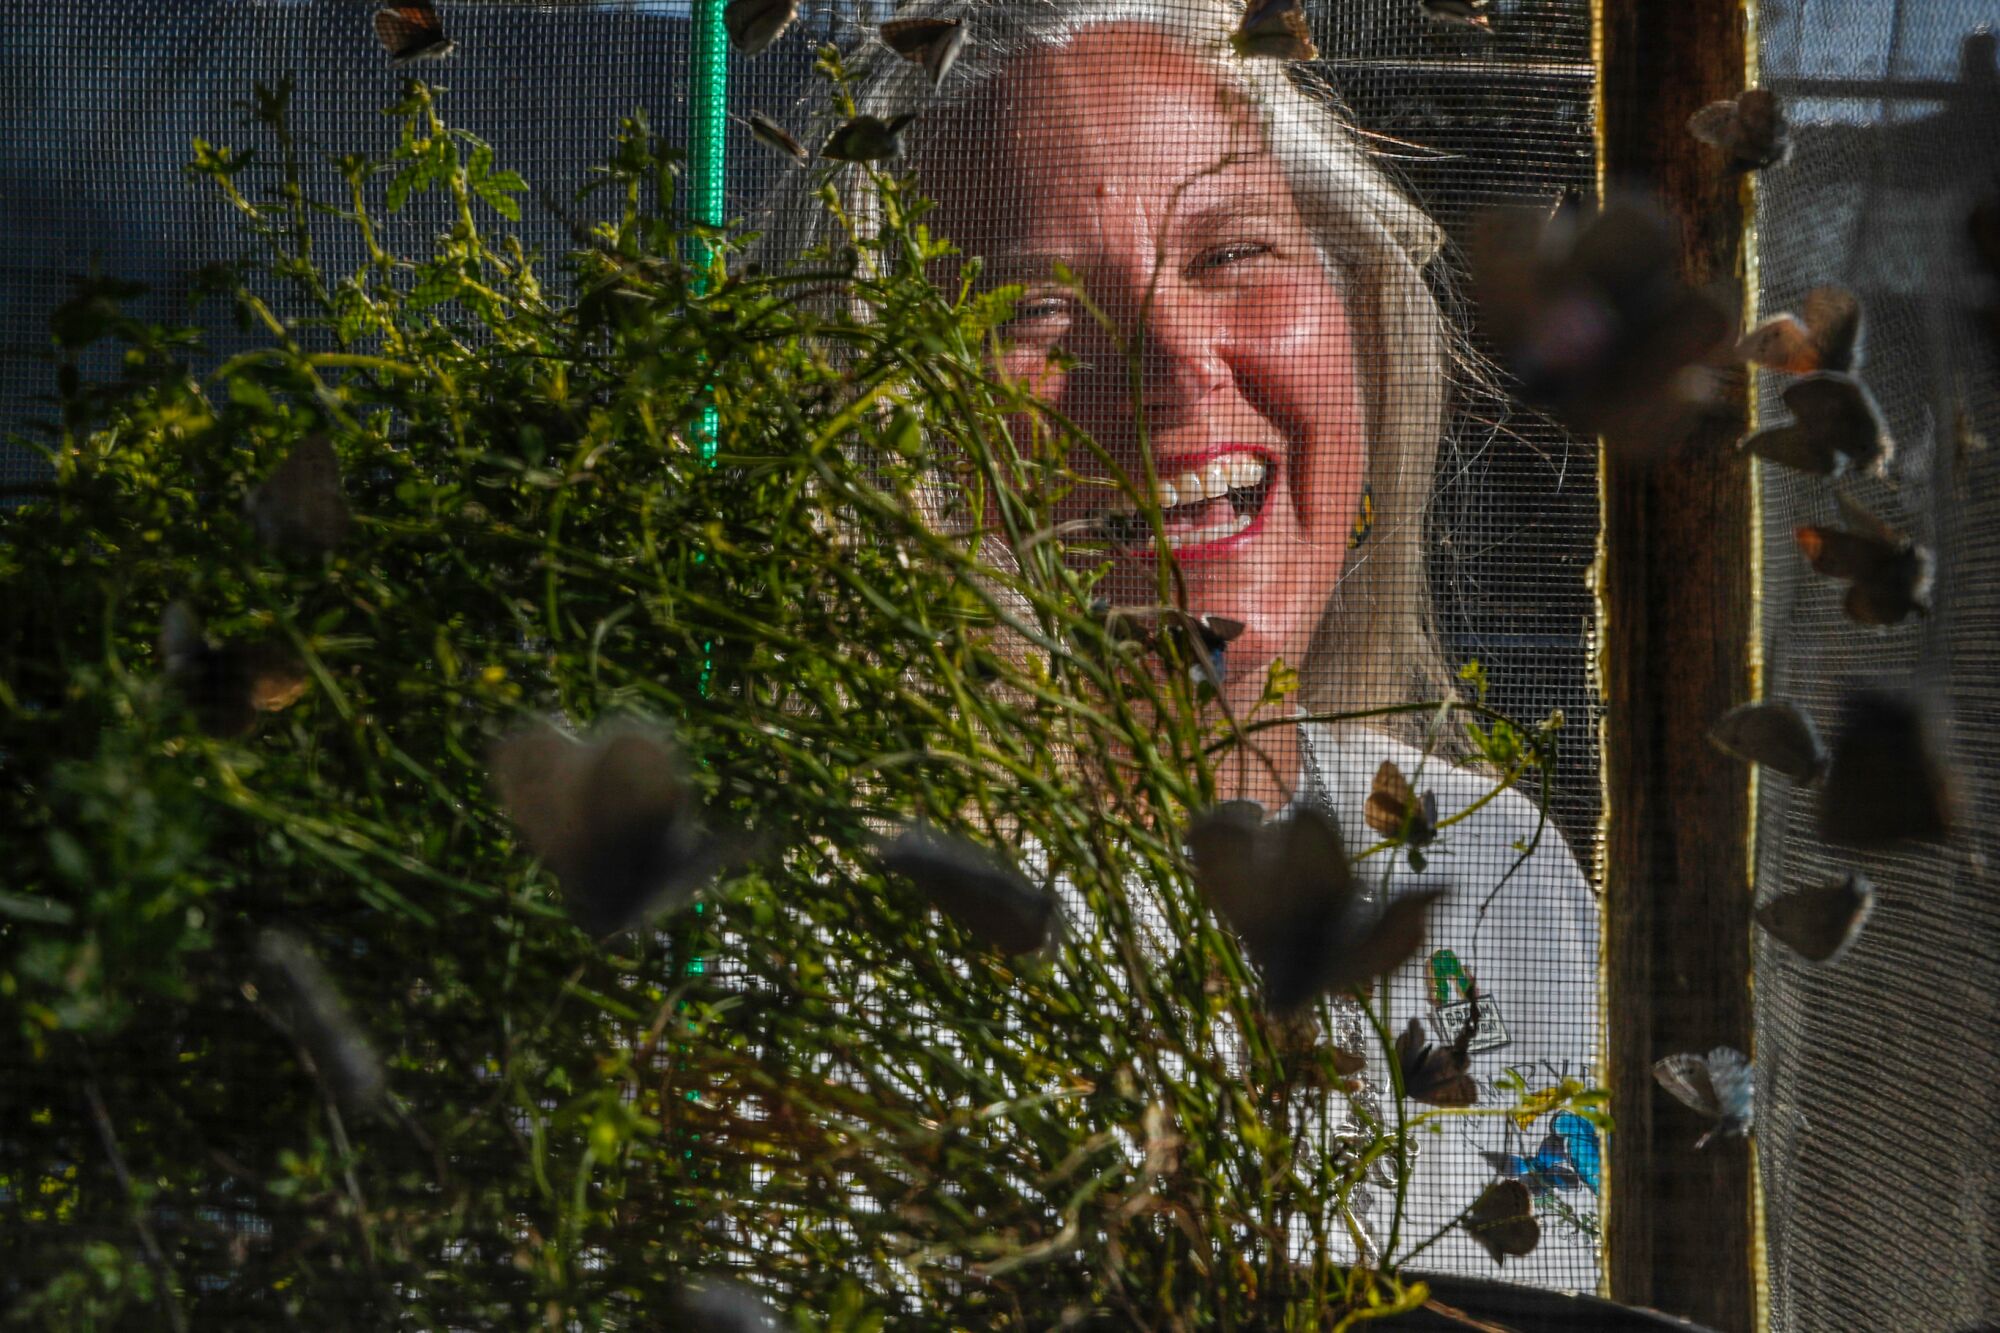 Jana Johnson standing behind a cage of butterflies.